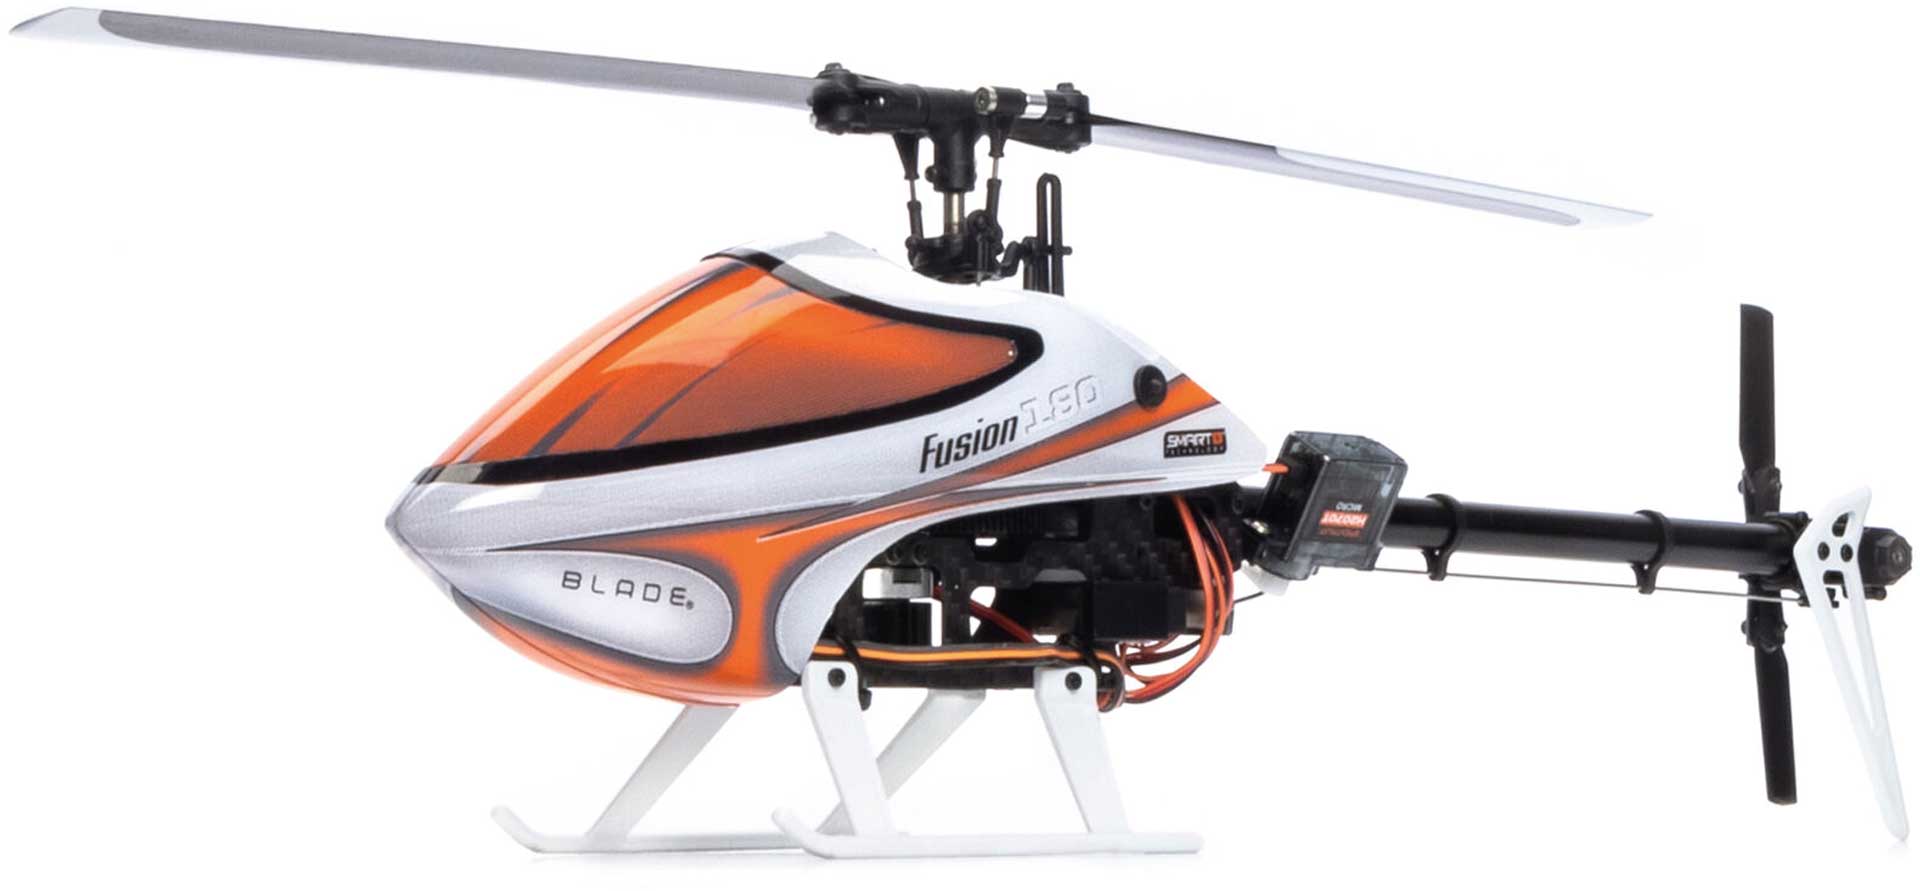 BLADE Fusion 180 BNF Smart Basic Hubschrauber / Helikopter